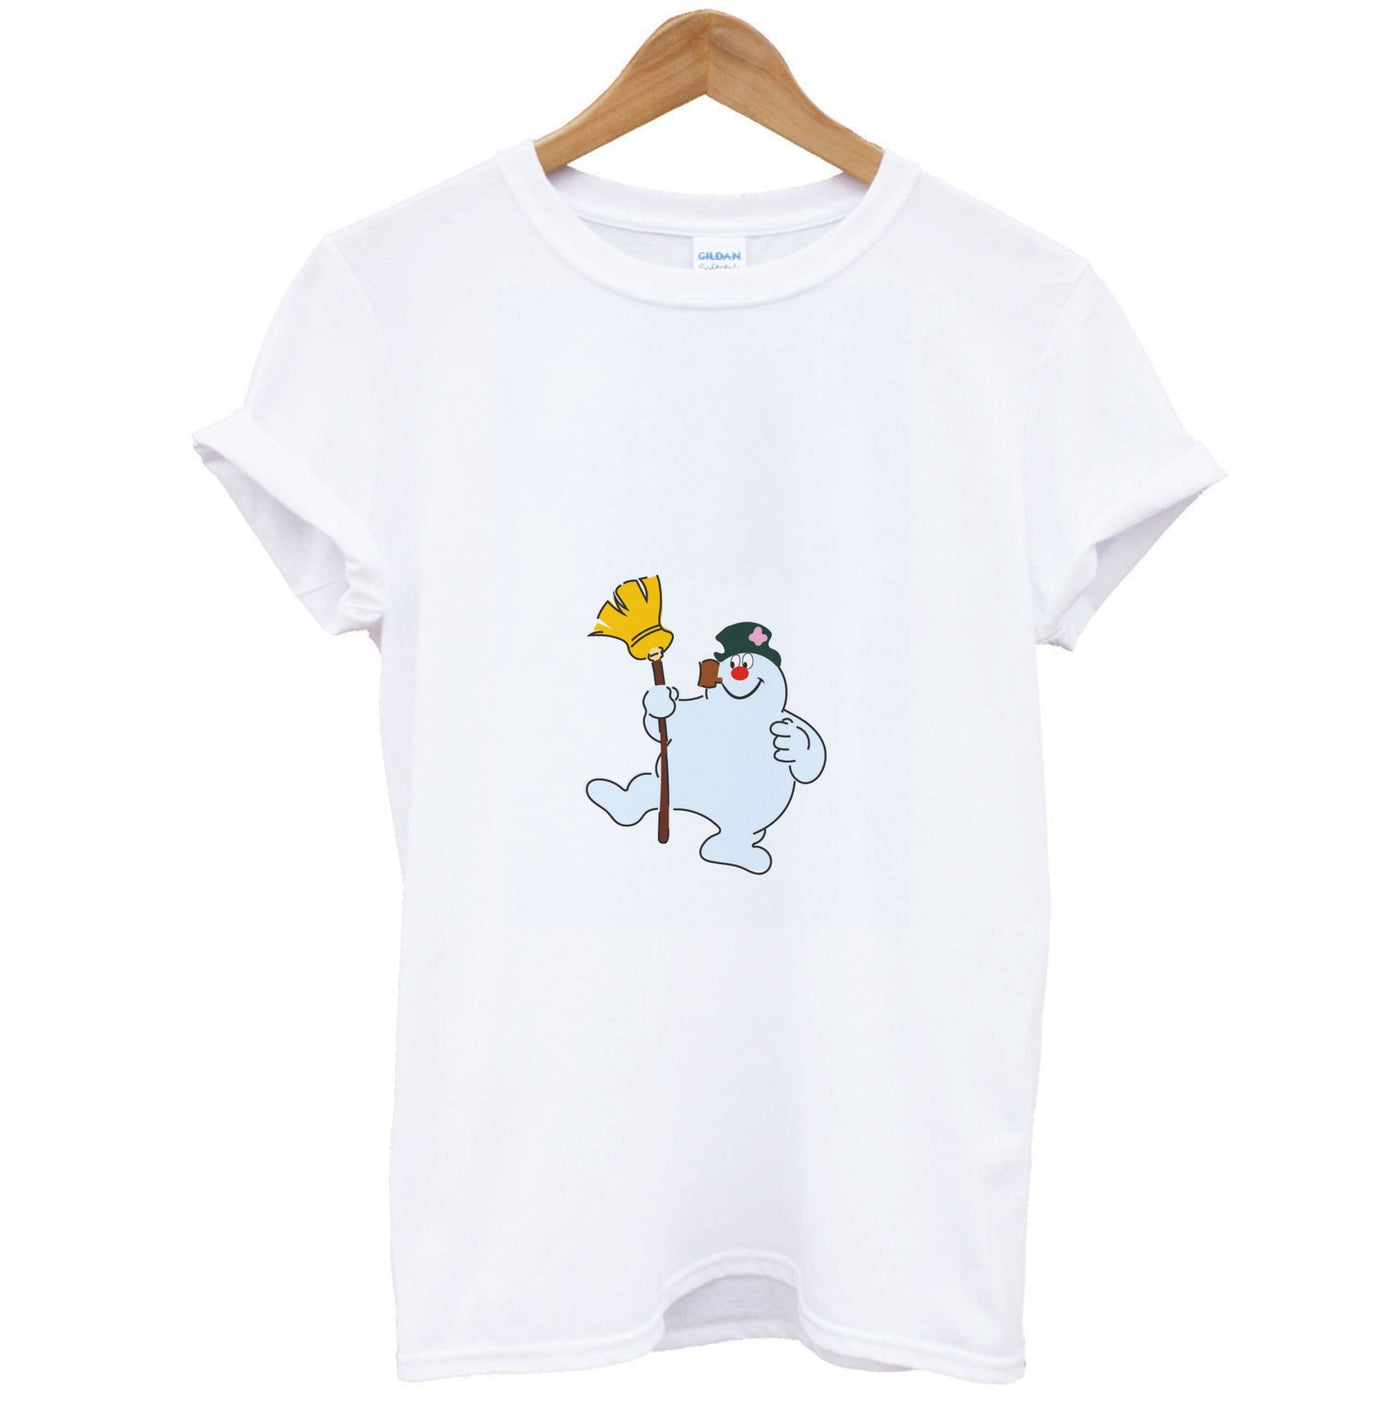 Broom - Frosty The Snowman T-Shirt